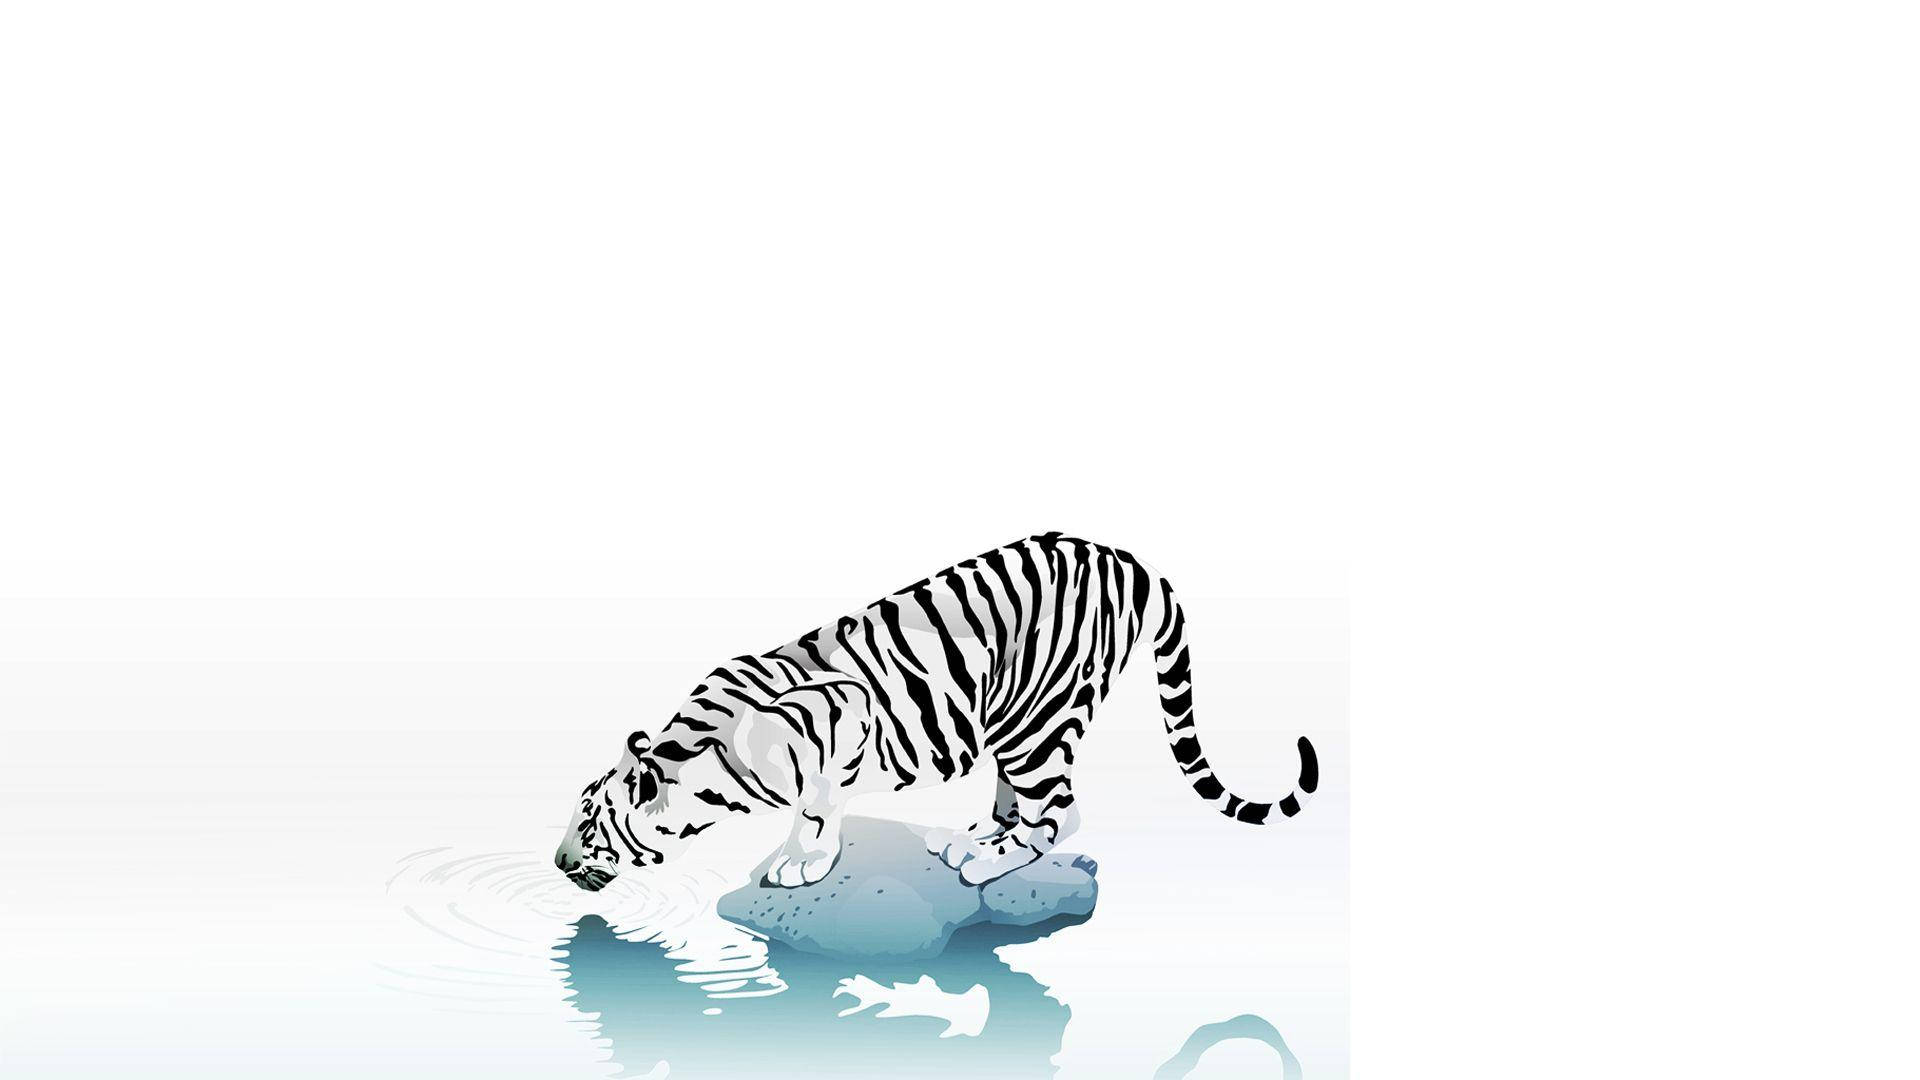 Cartoon Tiger On White Background